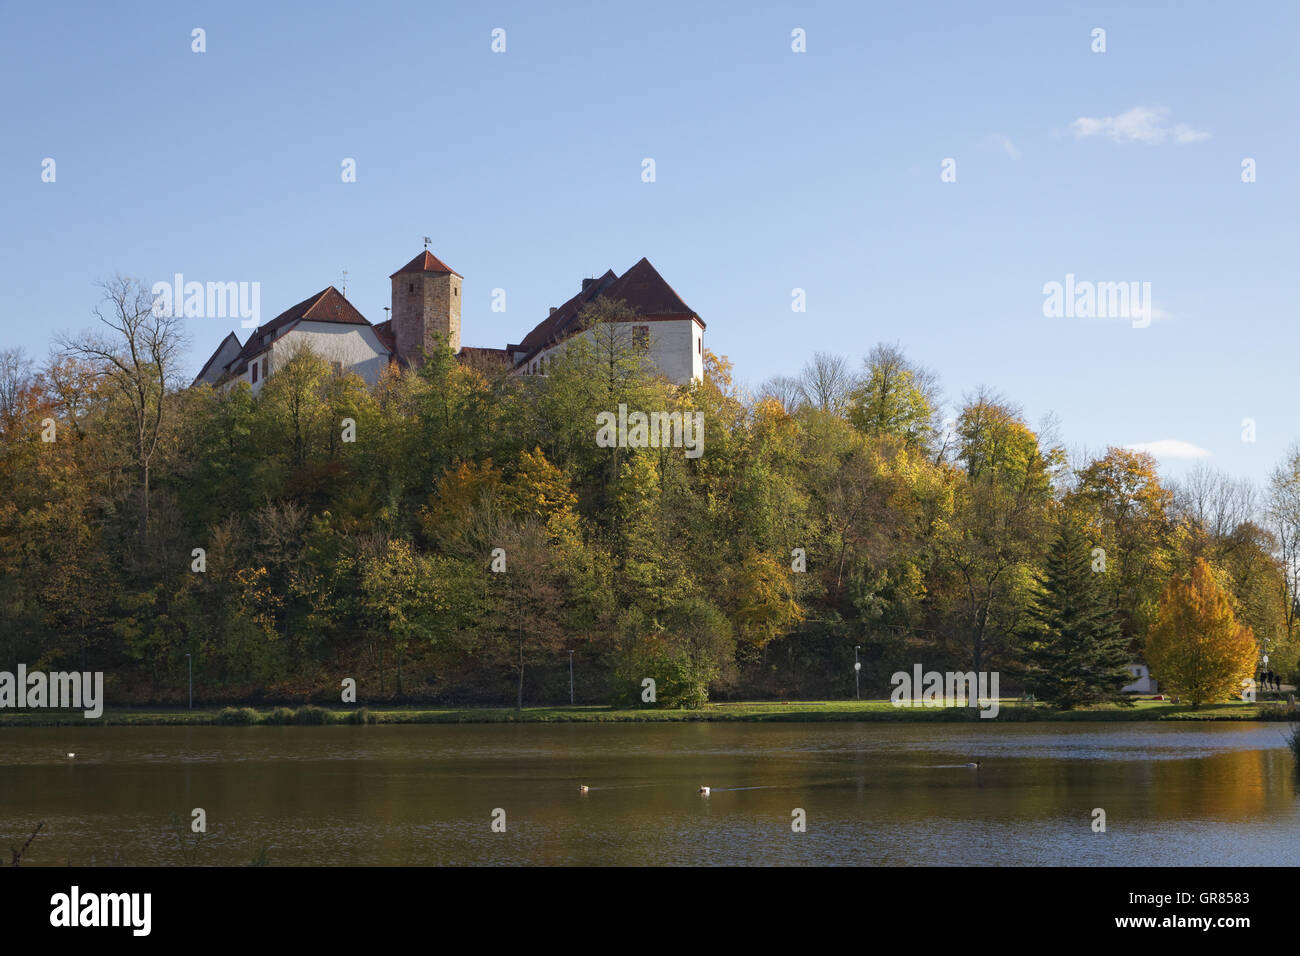 Bad Iburg castello in autunno, Osnabruecker Terra, Bassa Sassonia, Germania Foto Stock